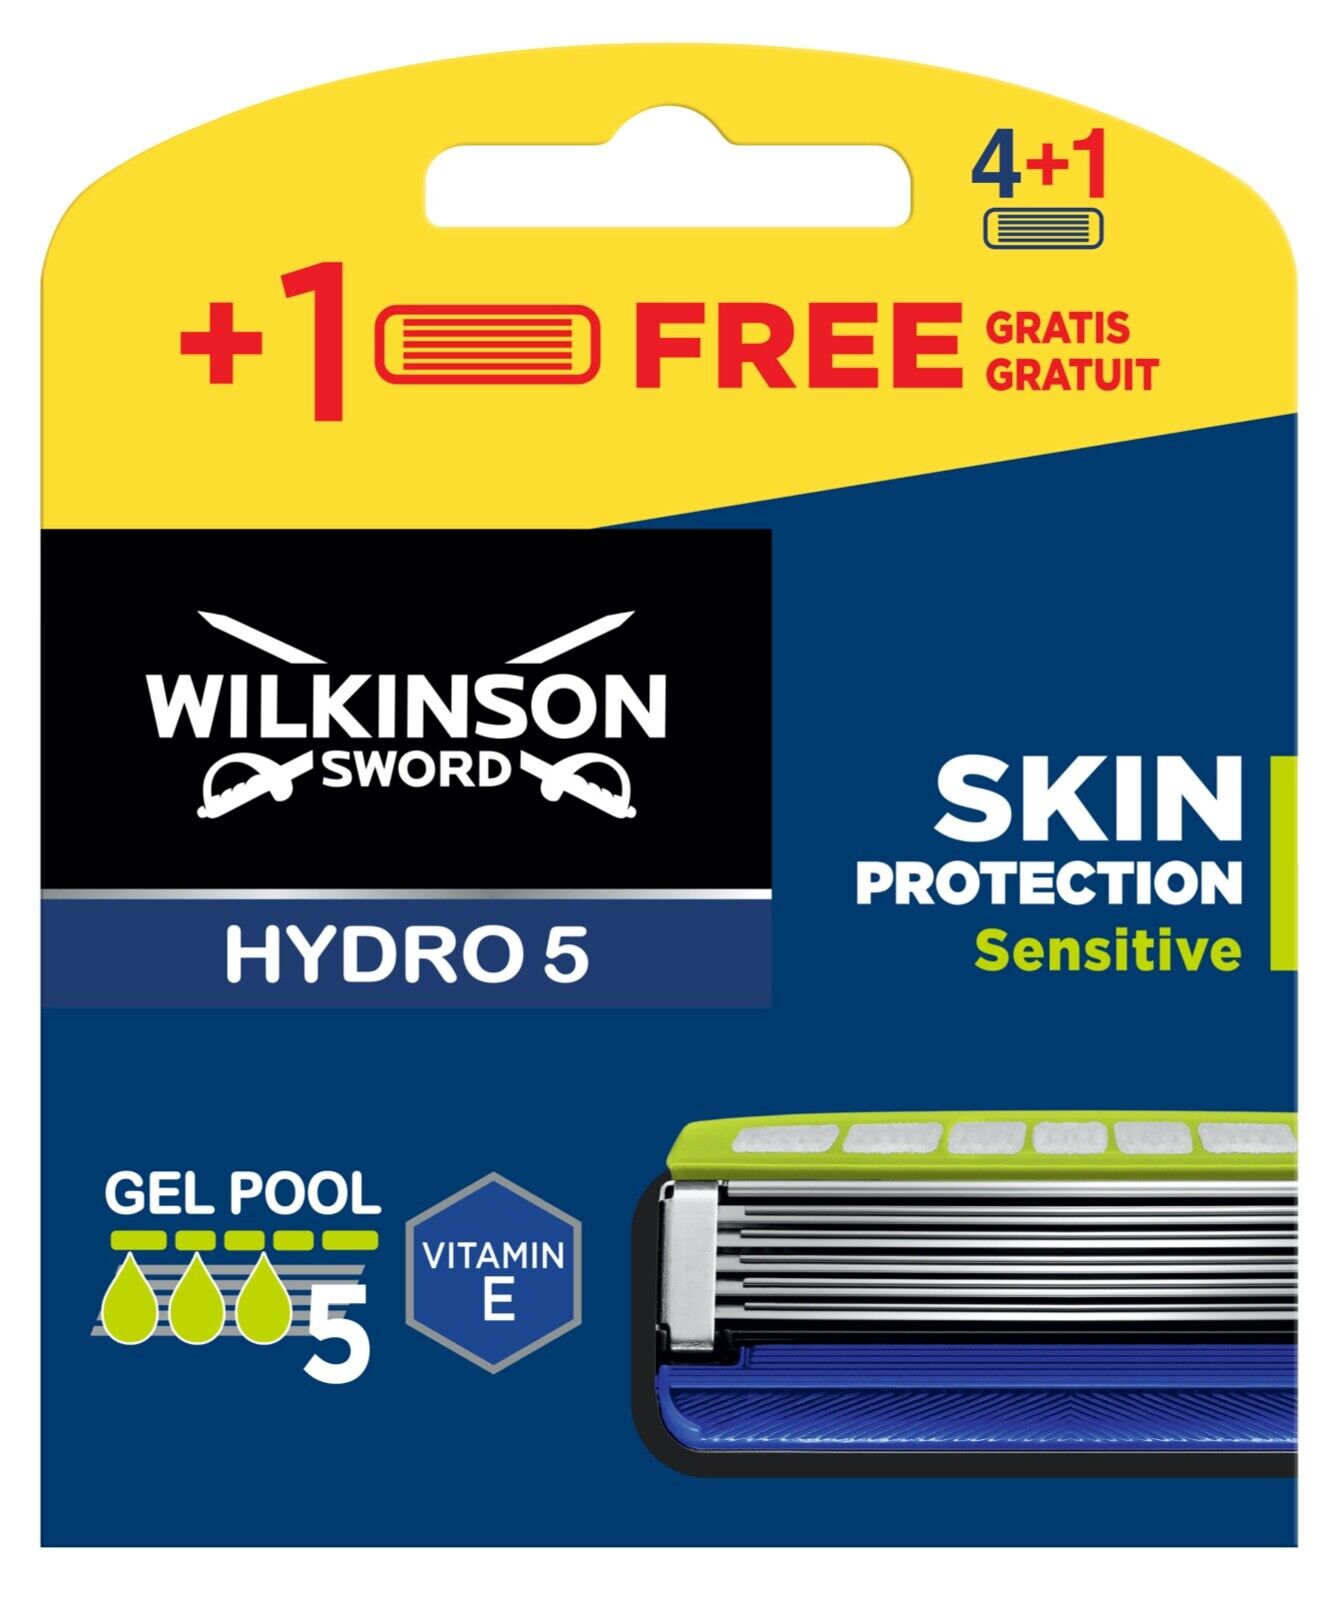 Сменные кассеты для бритвы Hydro Wilkinson Sword Hydro5 SKIN PROTECTION SENSITIVE, 5 шт. сменные кассеты для бритв sense wilkinson sword hydro 5 skin premiun edition 8 шт